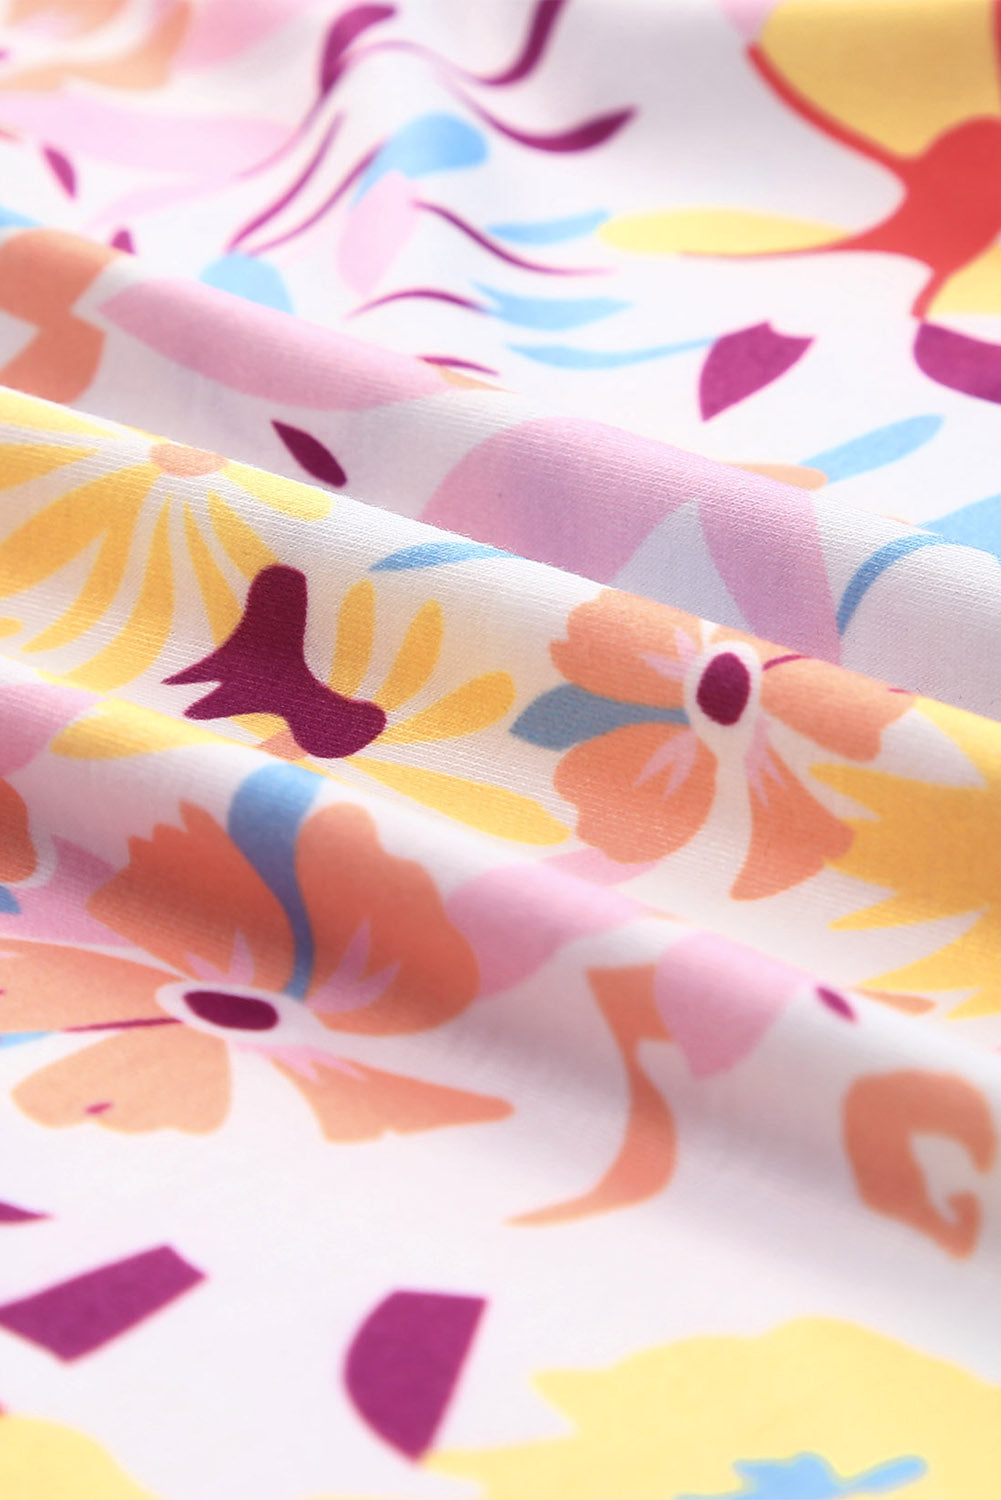 Multicolor Floral Print Ruffled Short Sleeve Plus Size Dress